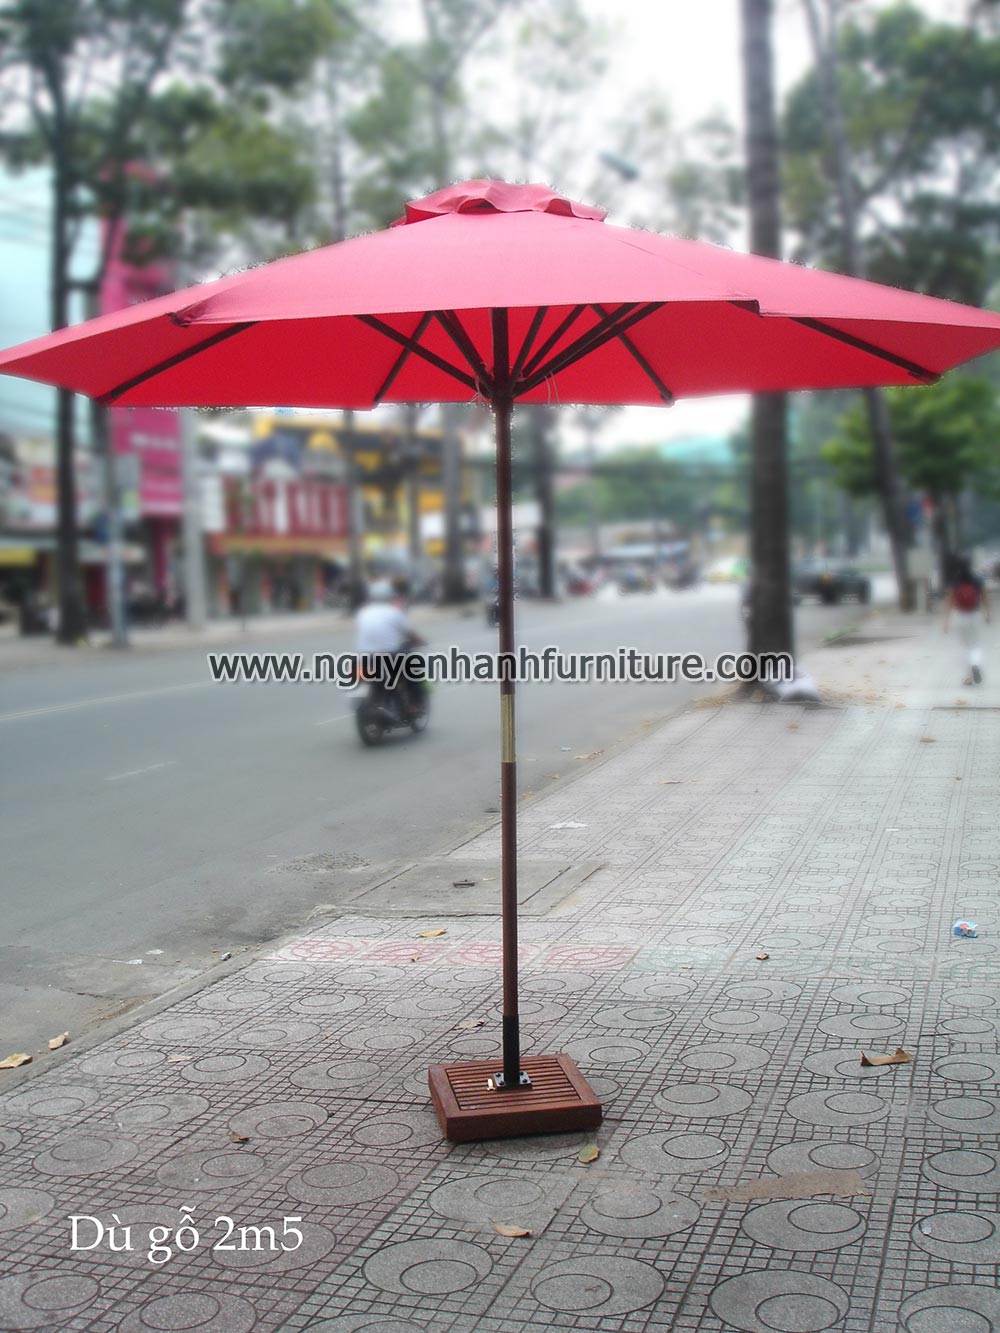 Name product: 2m5 Wooden umbrella - Dimensions: 2m5 diameter - Description: Red oil wood